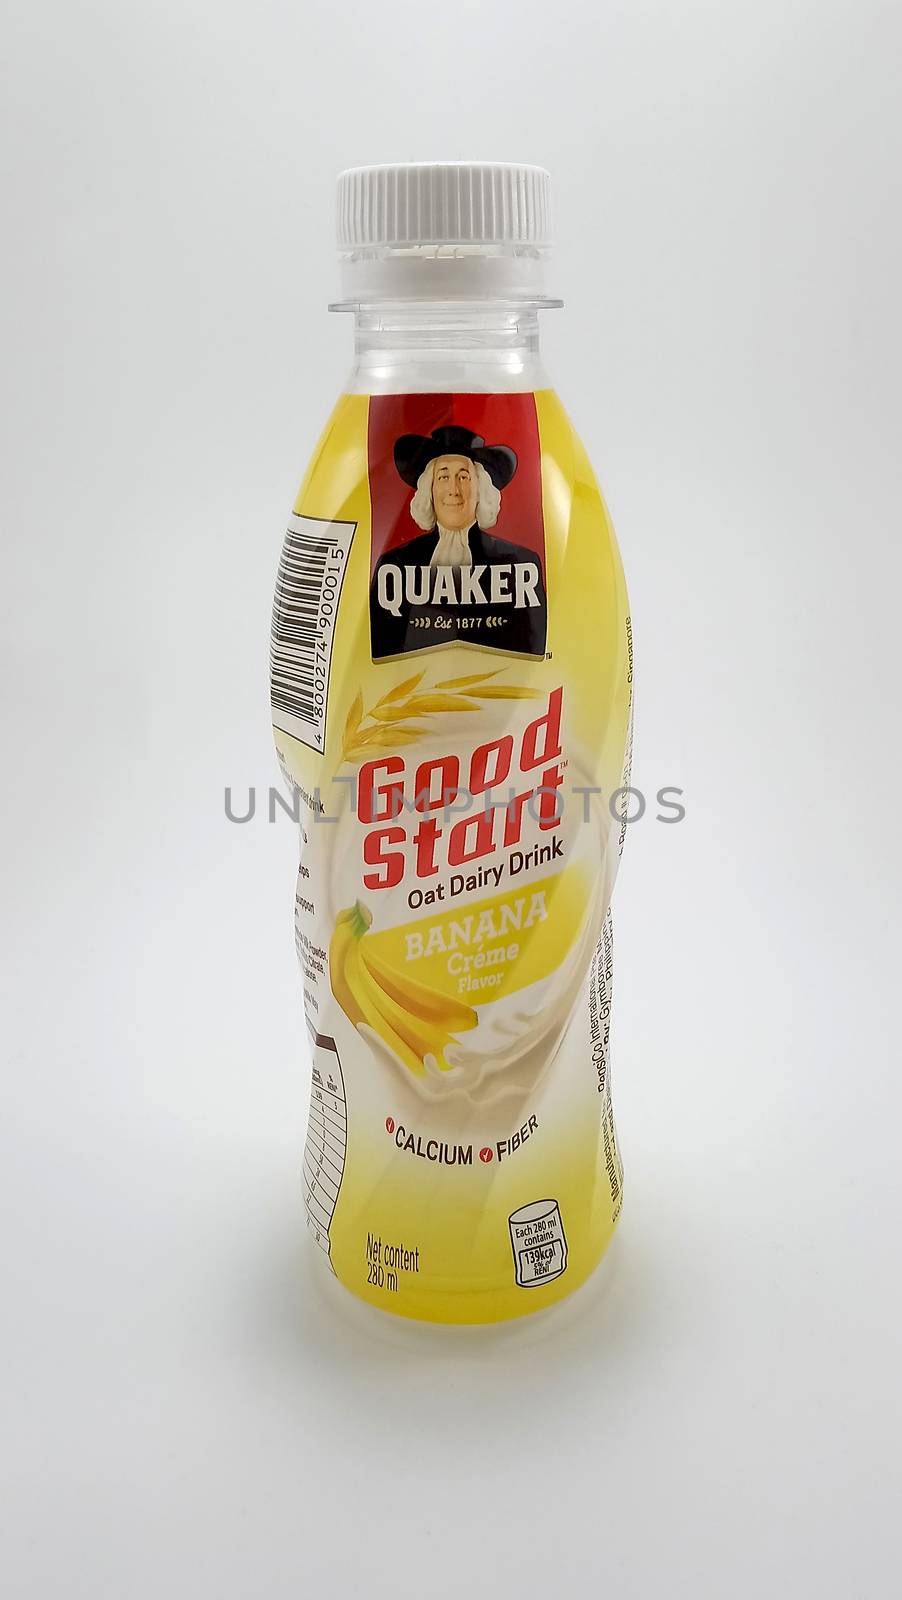 MANILA, PH - JUNE 23 - Quaker good start oat dairy banana creme flavor drink on June 23, 2020 in Manila, Philippines.